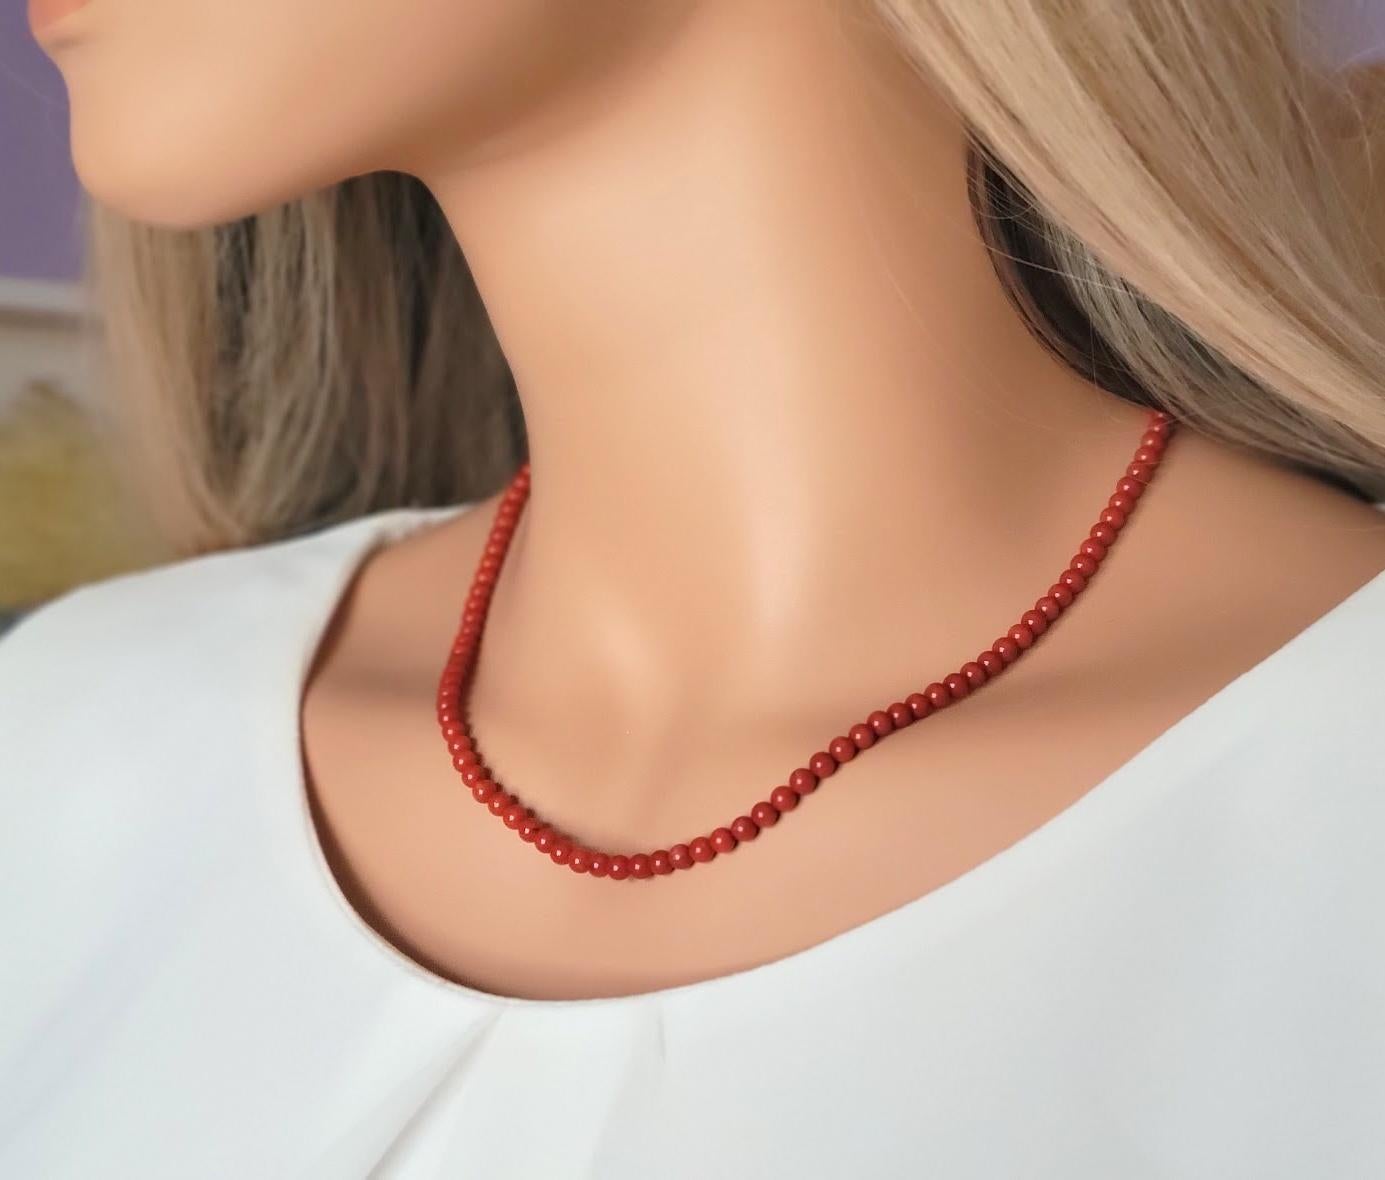 red coral necklace vintage